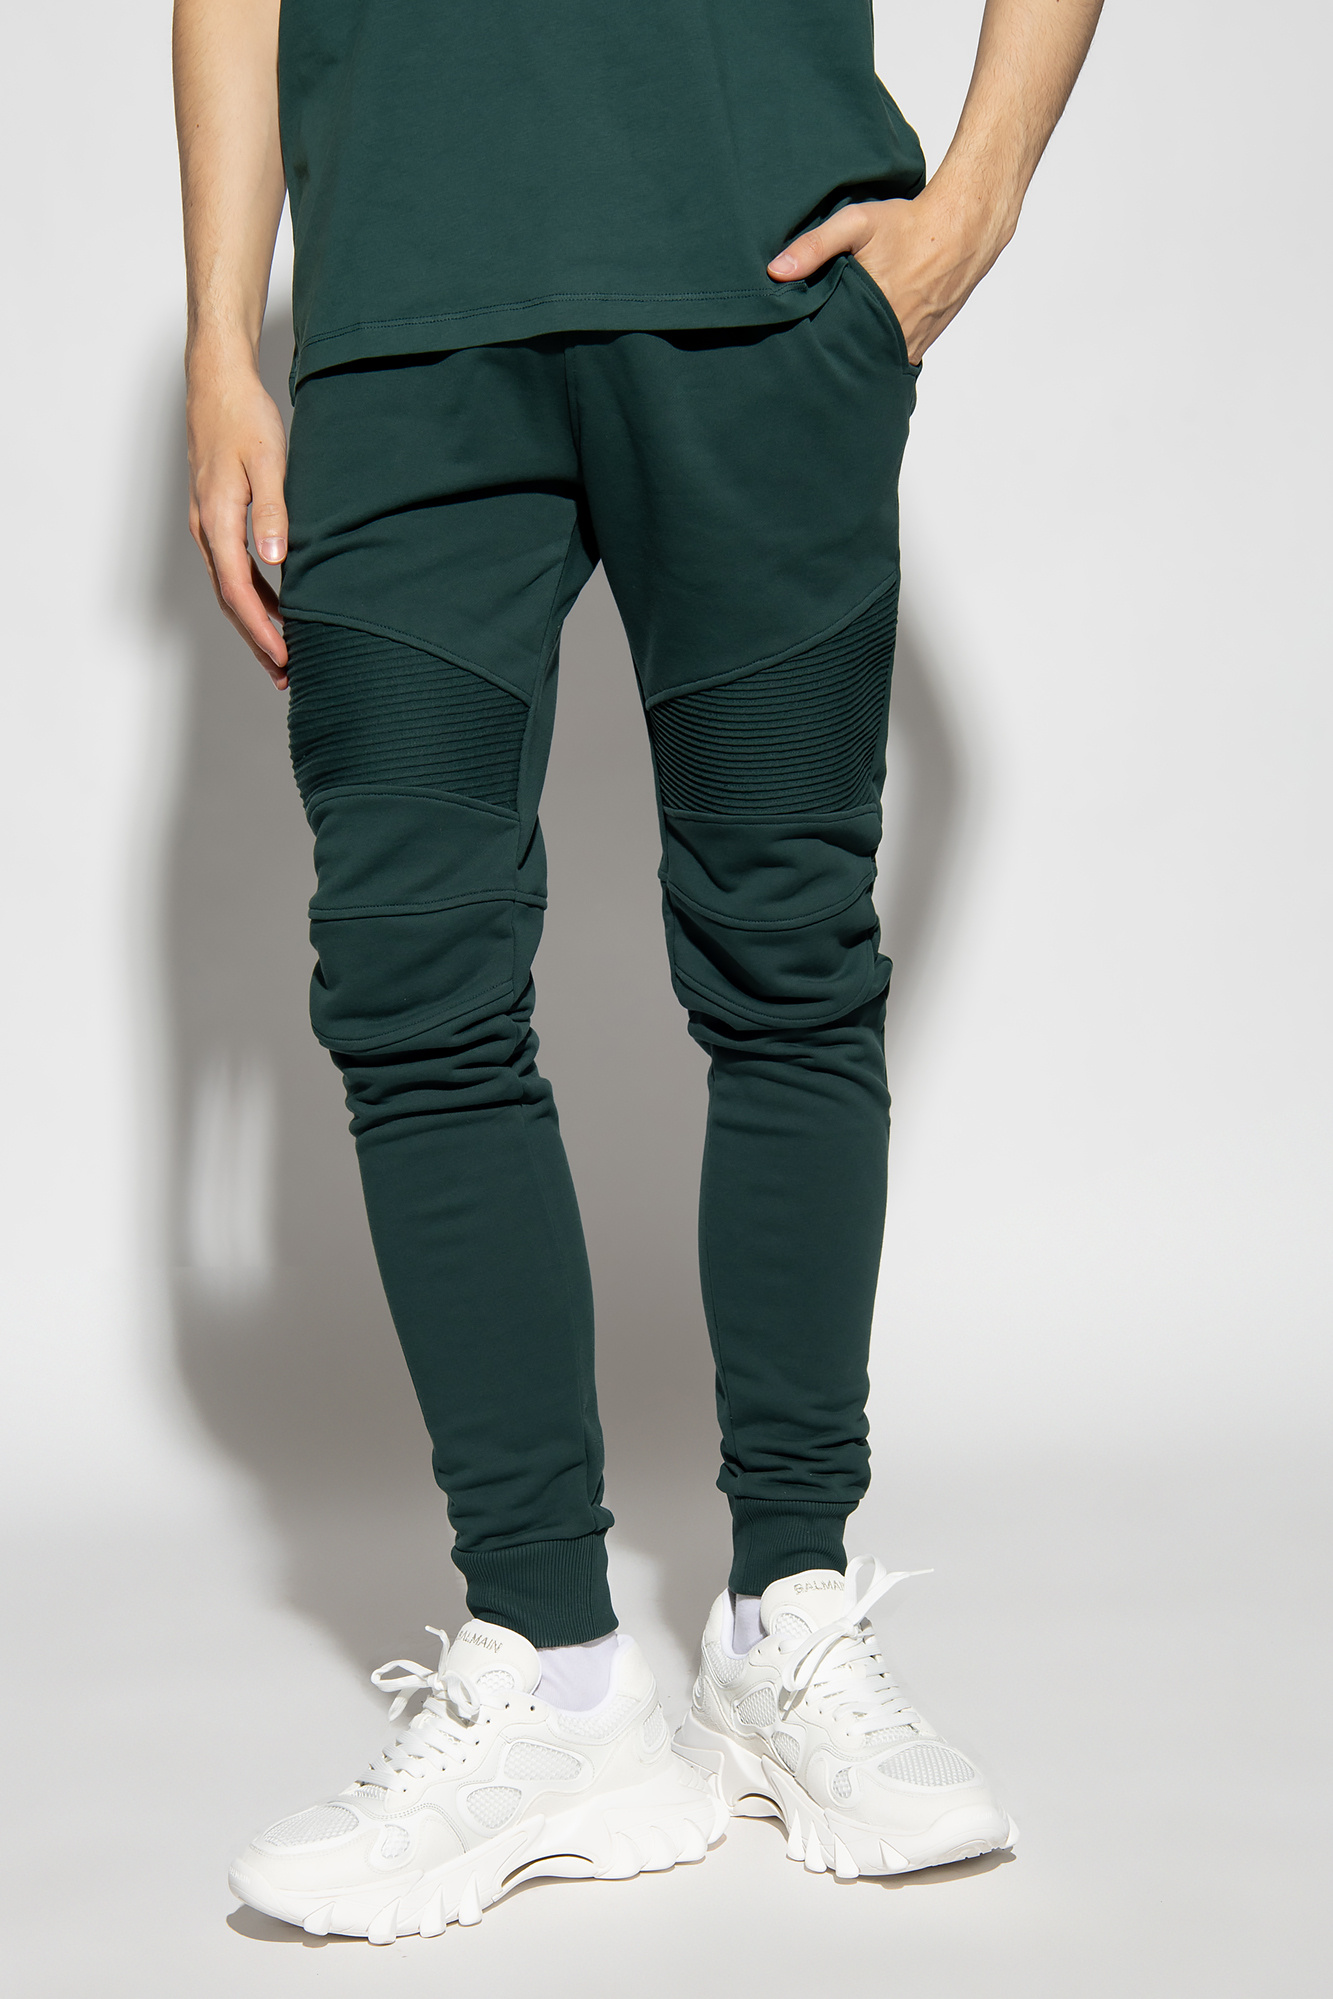 Green Sweatpants with logo Balmain - Vitkac GB